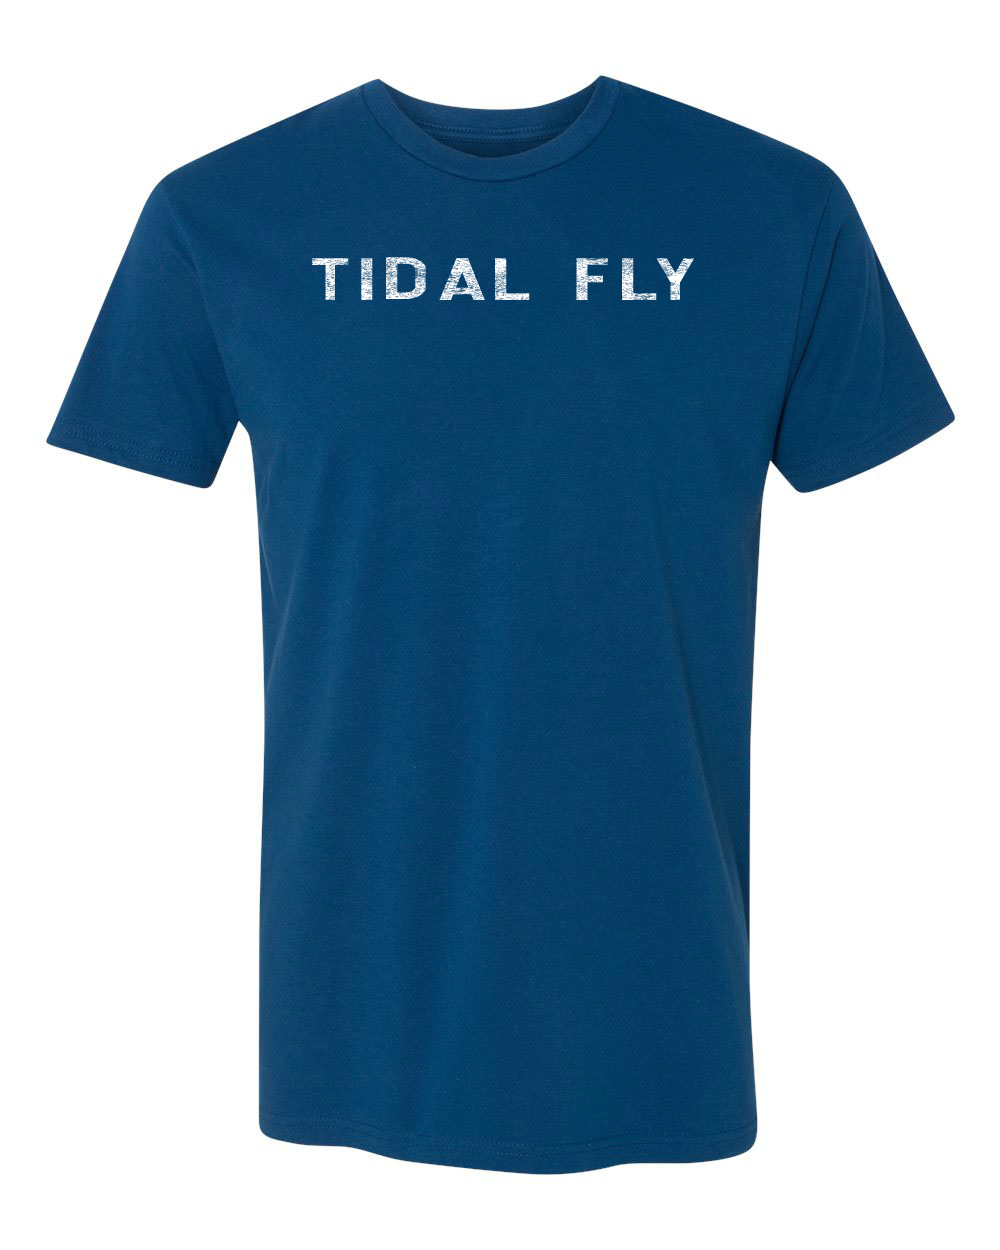 Short Sleeve Tidal Fly 100% cotton front font, full back logo